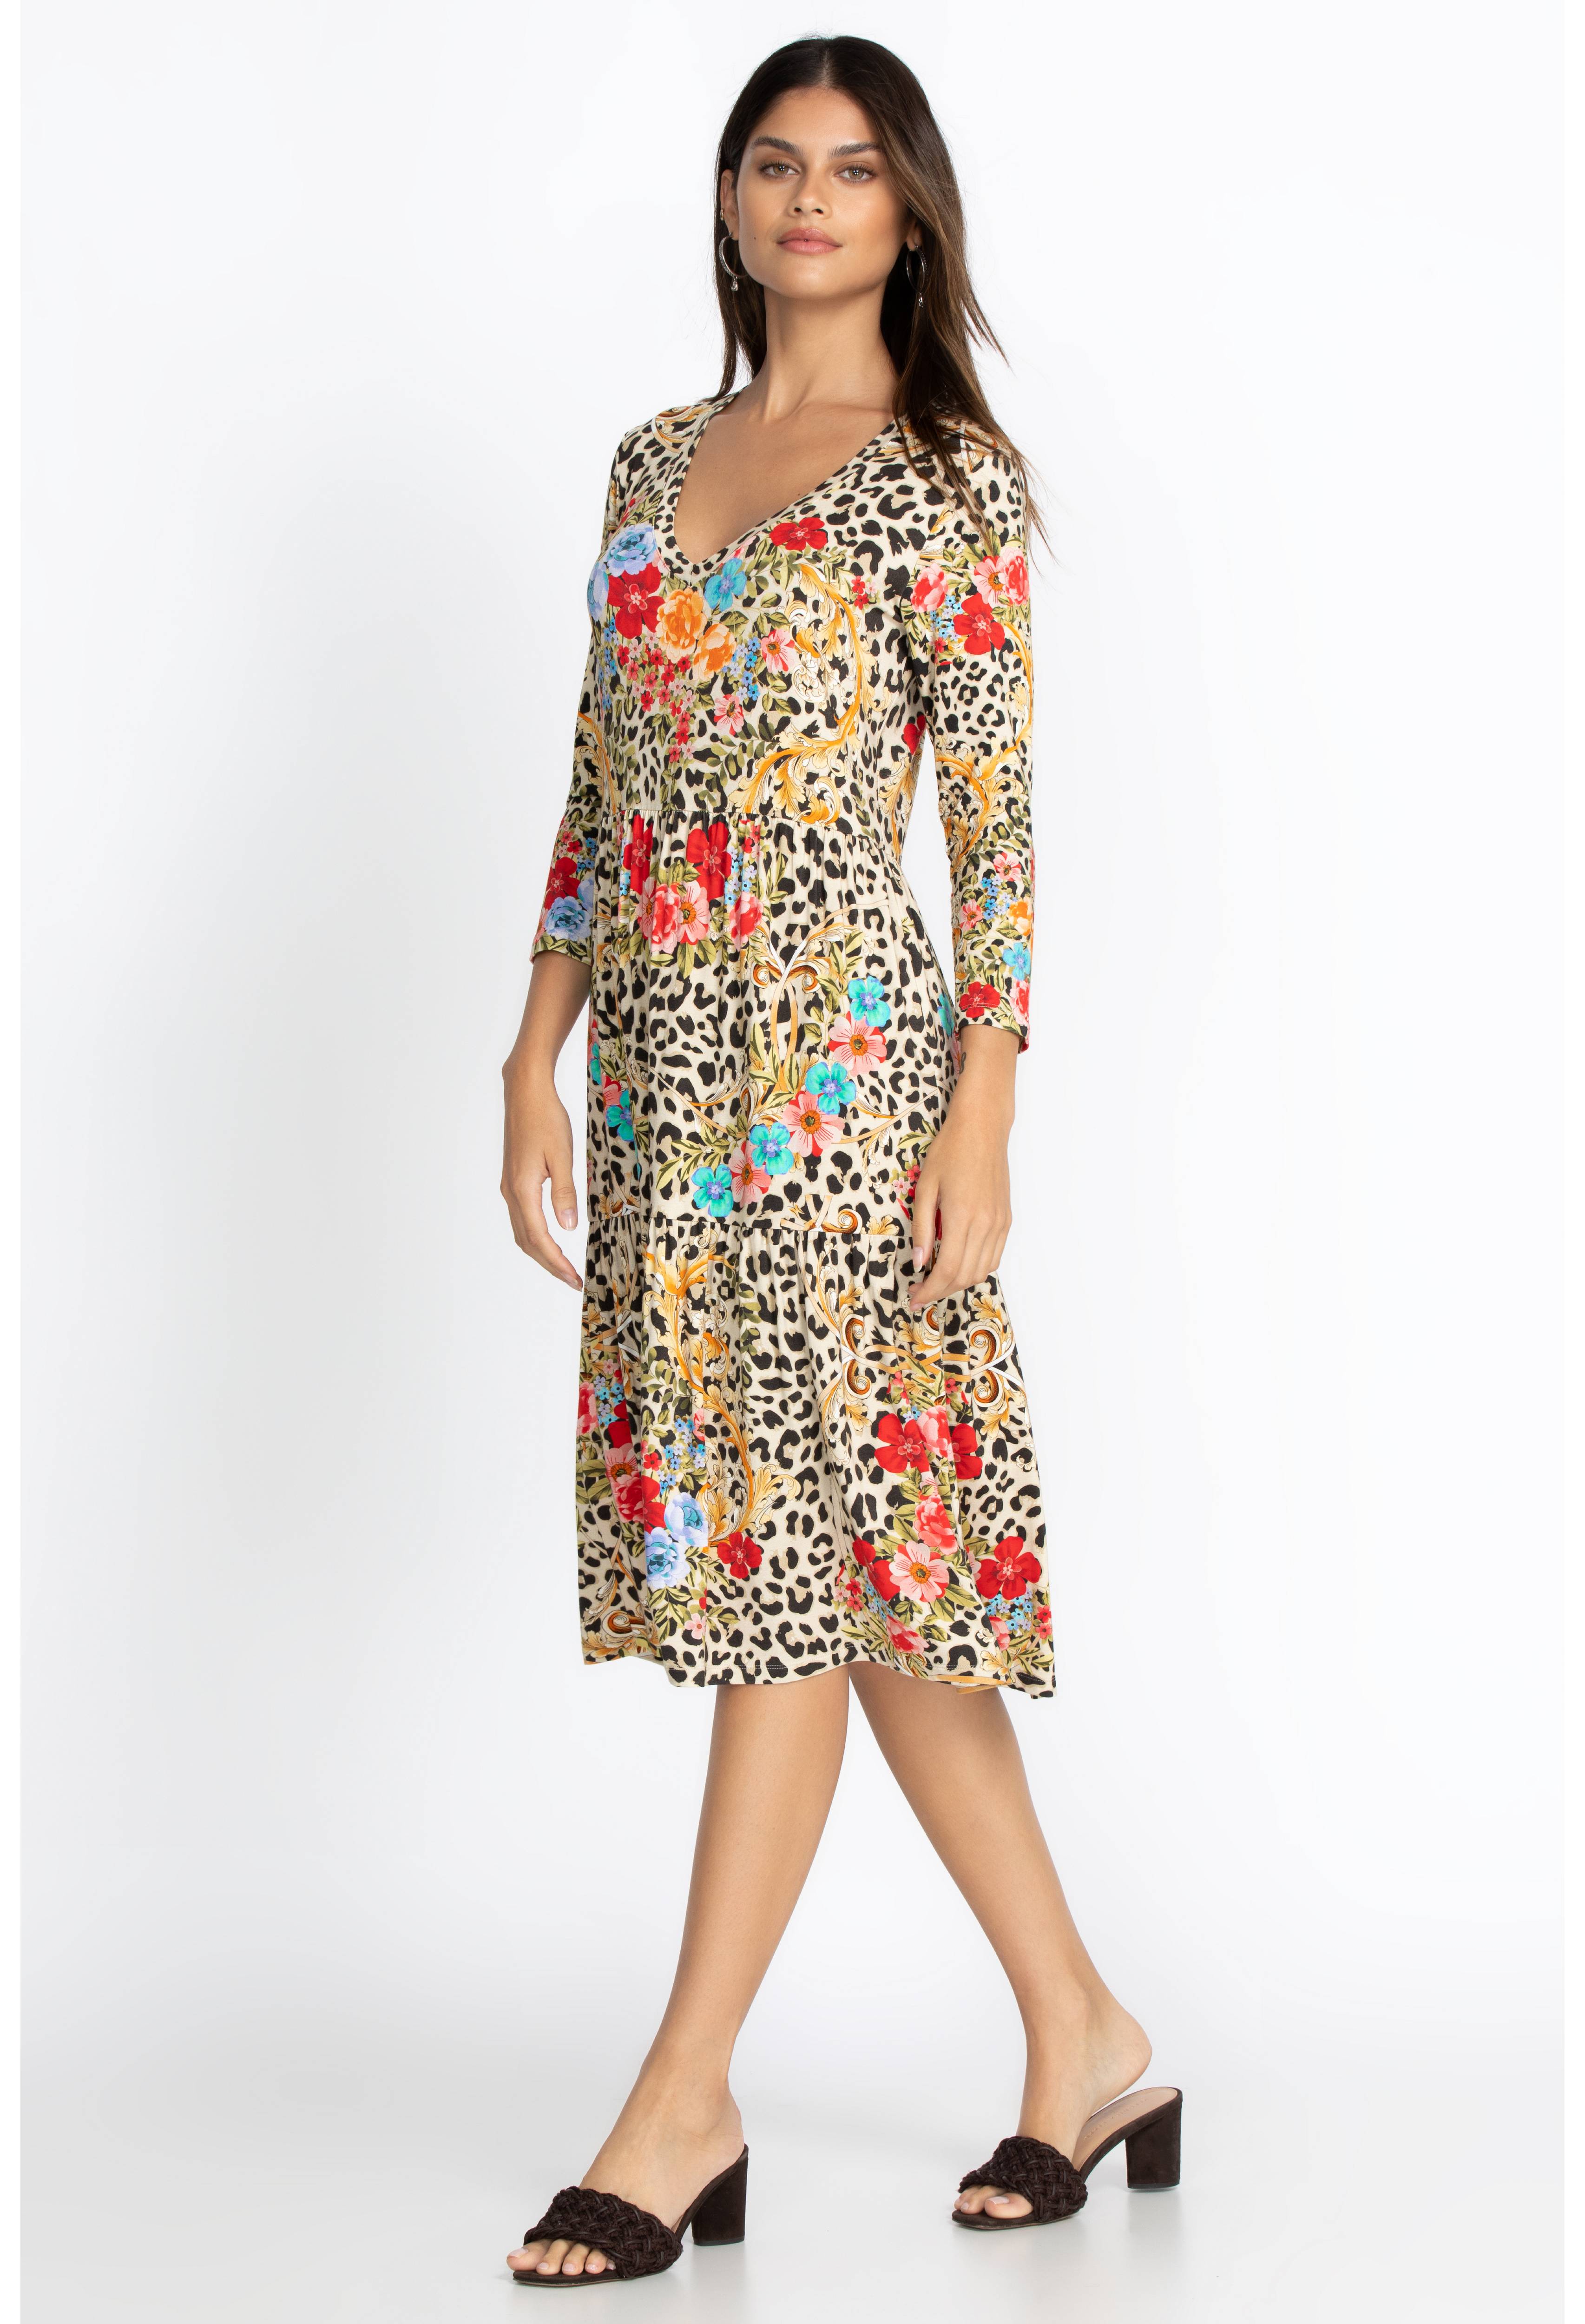 Cheetah Tiered Tea Length Dress, , large image number 2